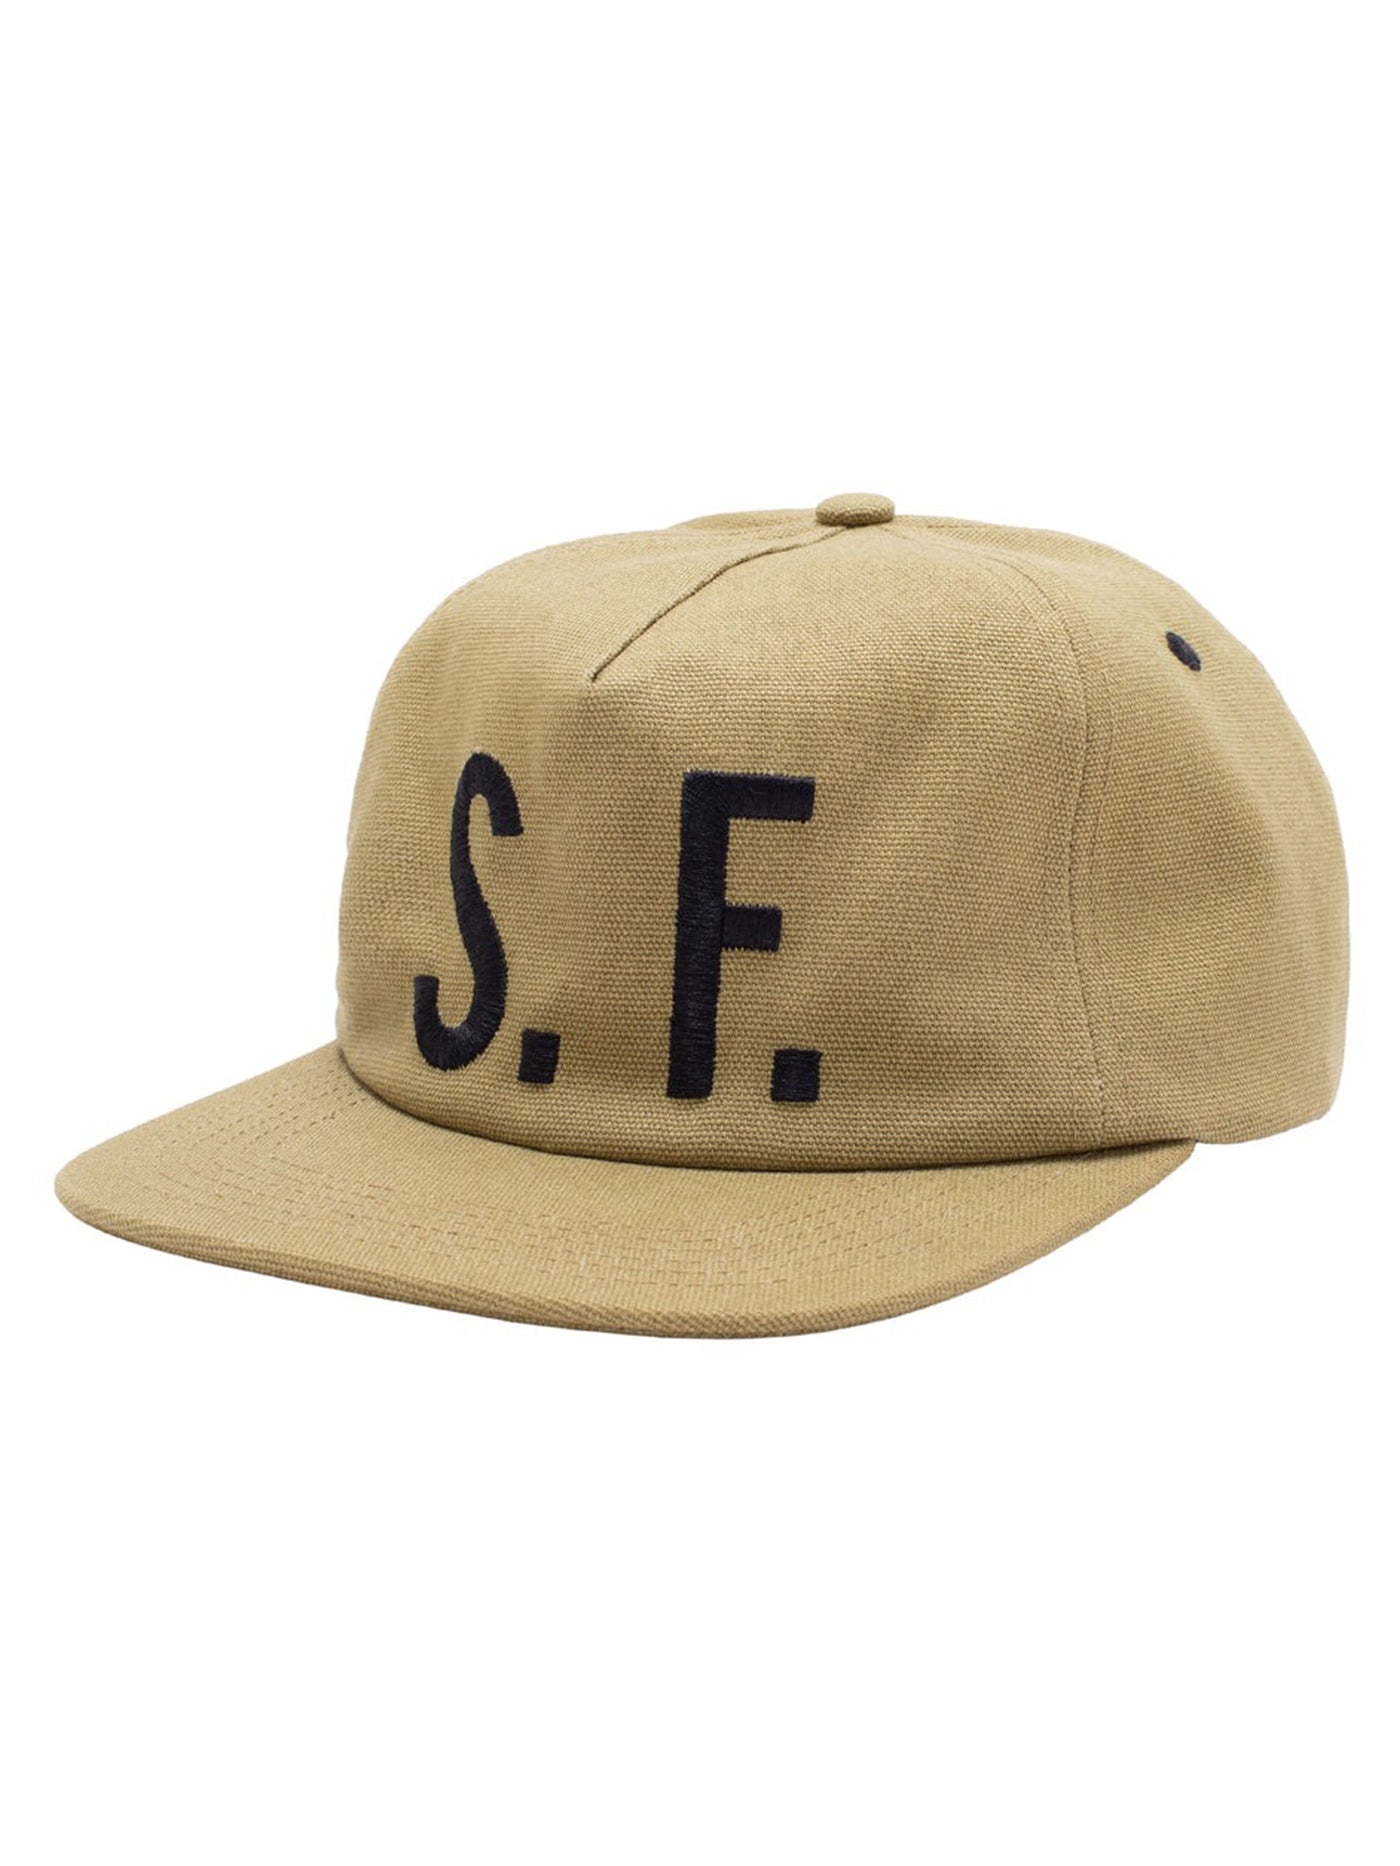 GX1000 SF Snapback Hat